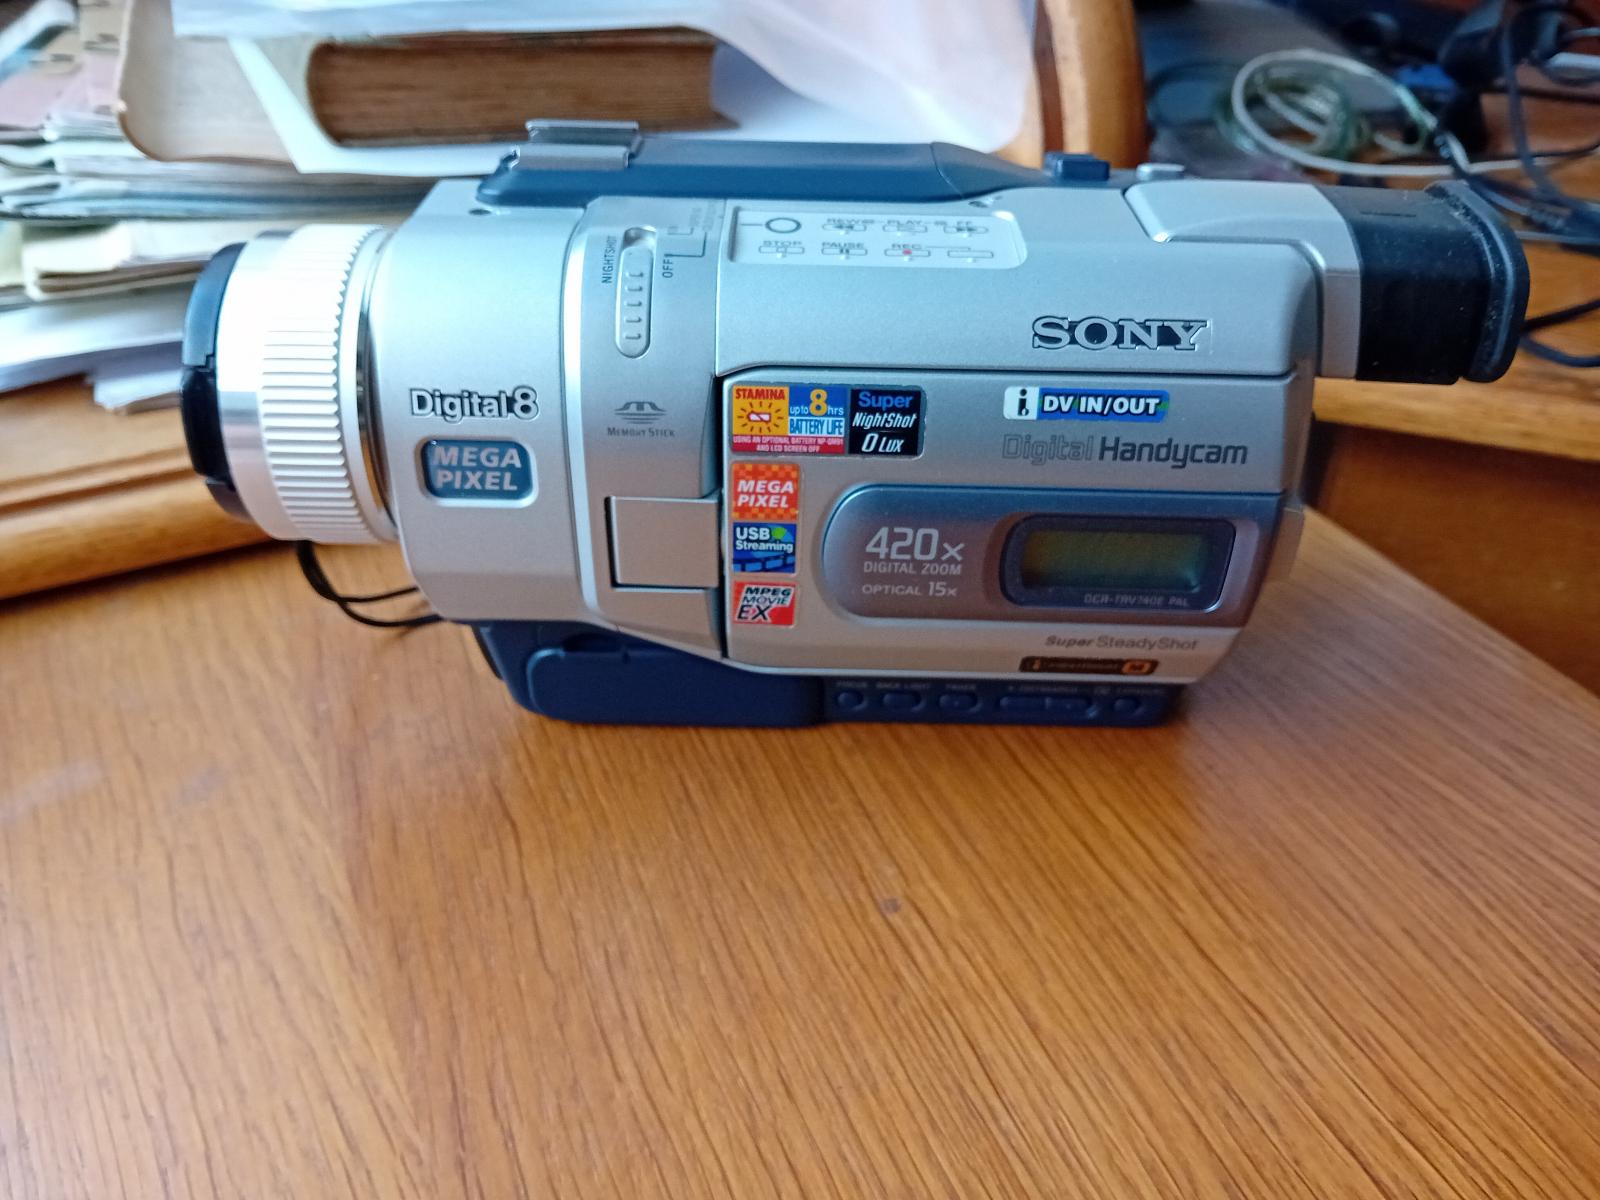 kamera SONY DCR-TRV740E - TV, audio, video